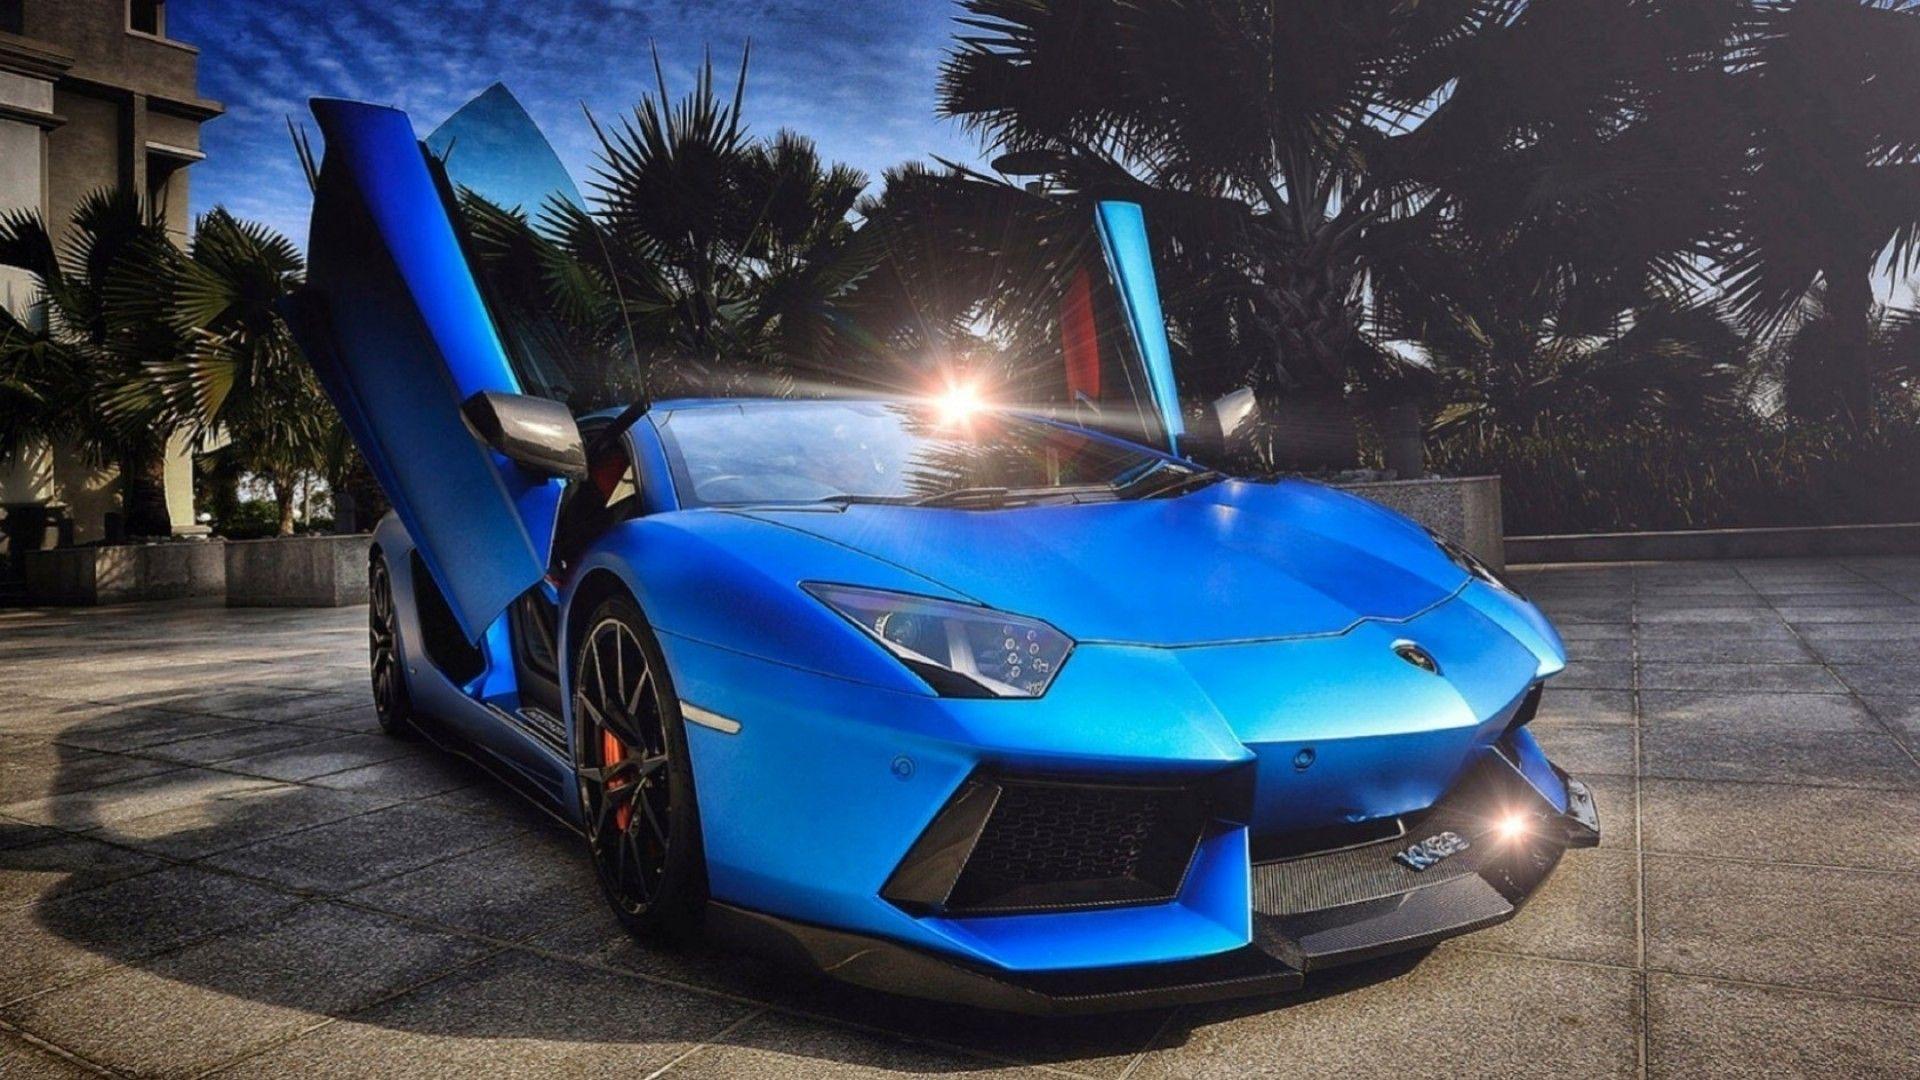 Blue Lamborghini Wallpaper For Android. Vehicles Wallpaper